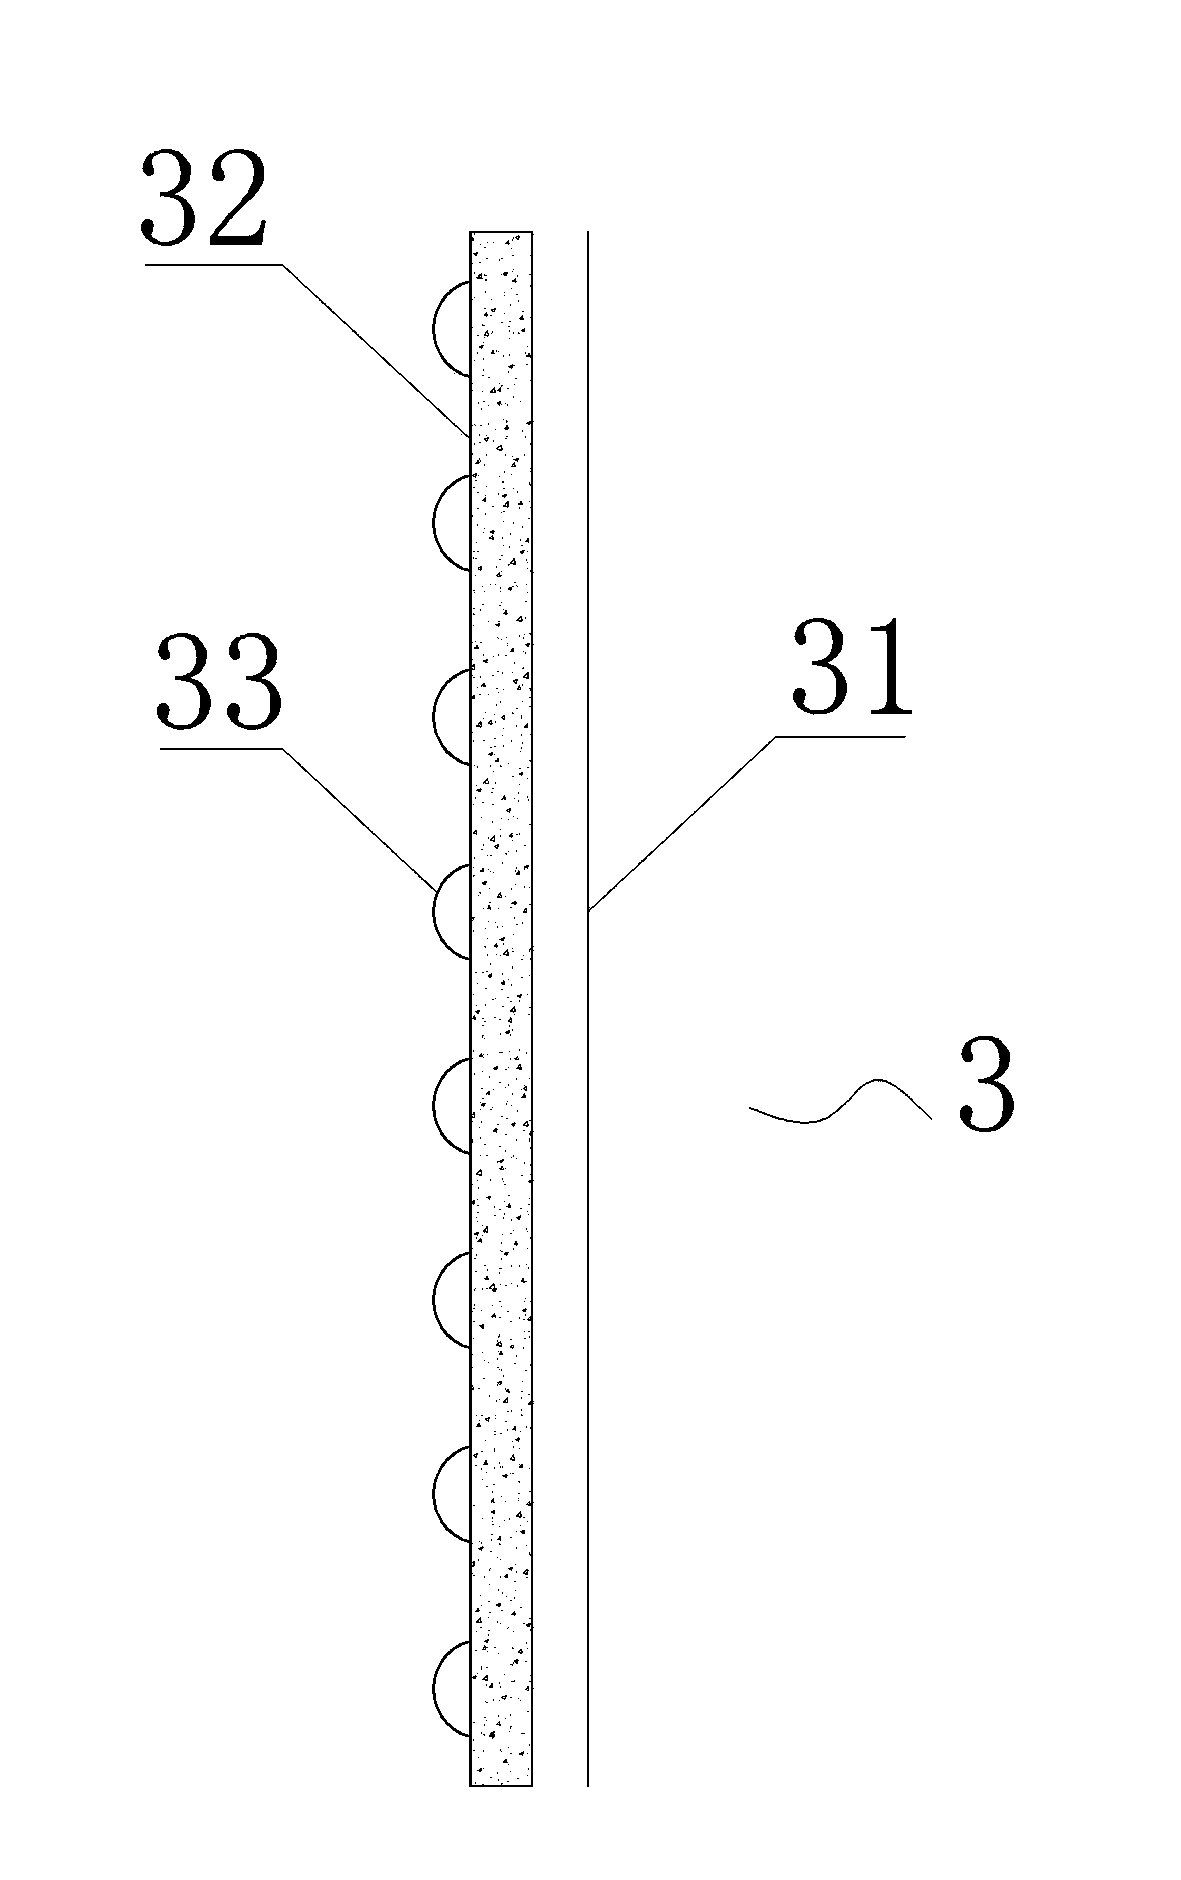 Functional fixer (paster/sheet/membrane) of indwelling needle/indwelling tube